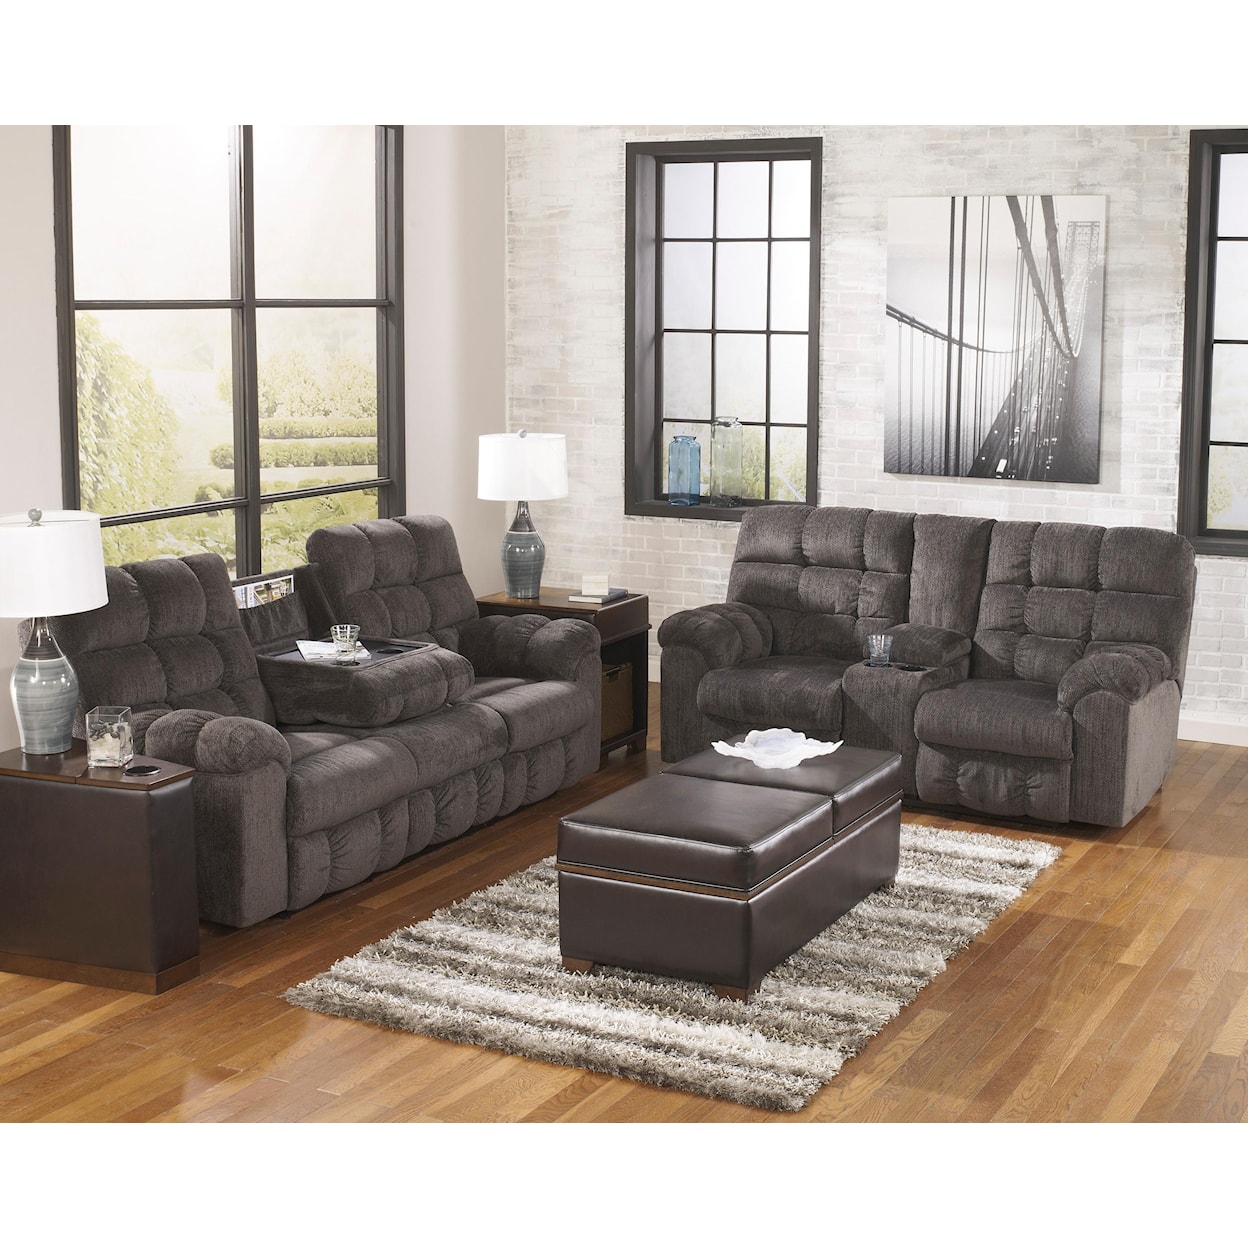 Ashley Furniture Signature Design Acieona Reclining Living Room Group